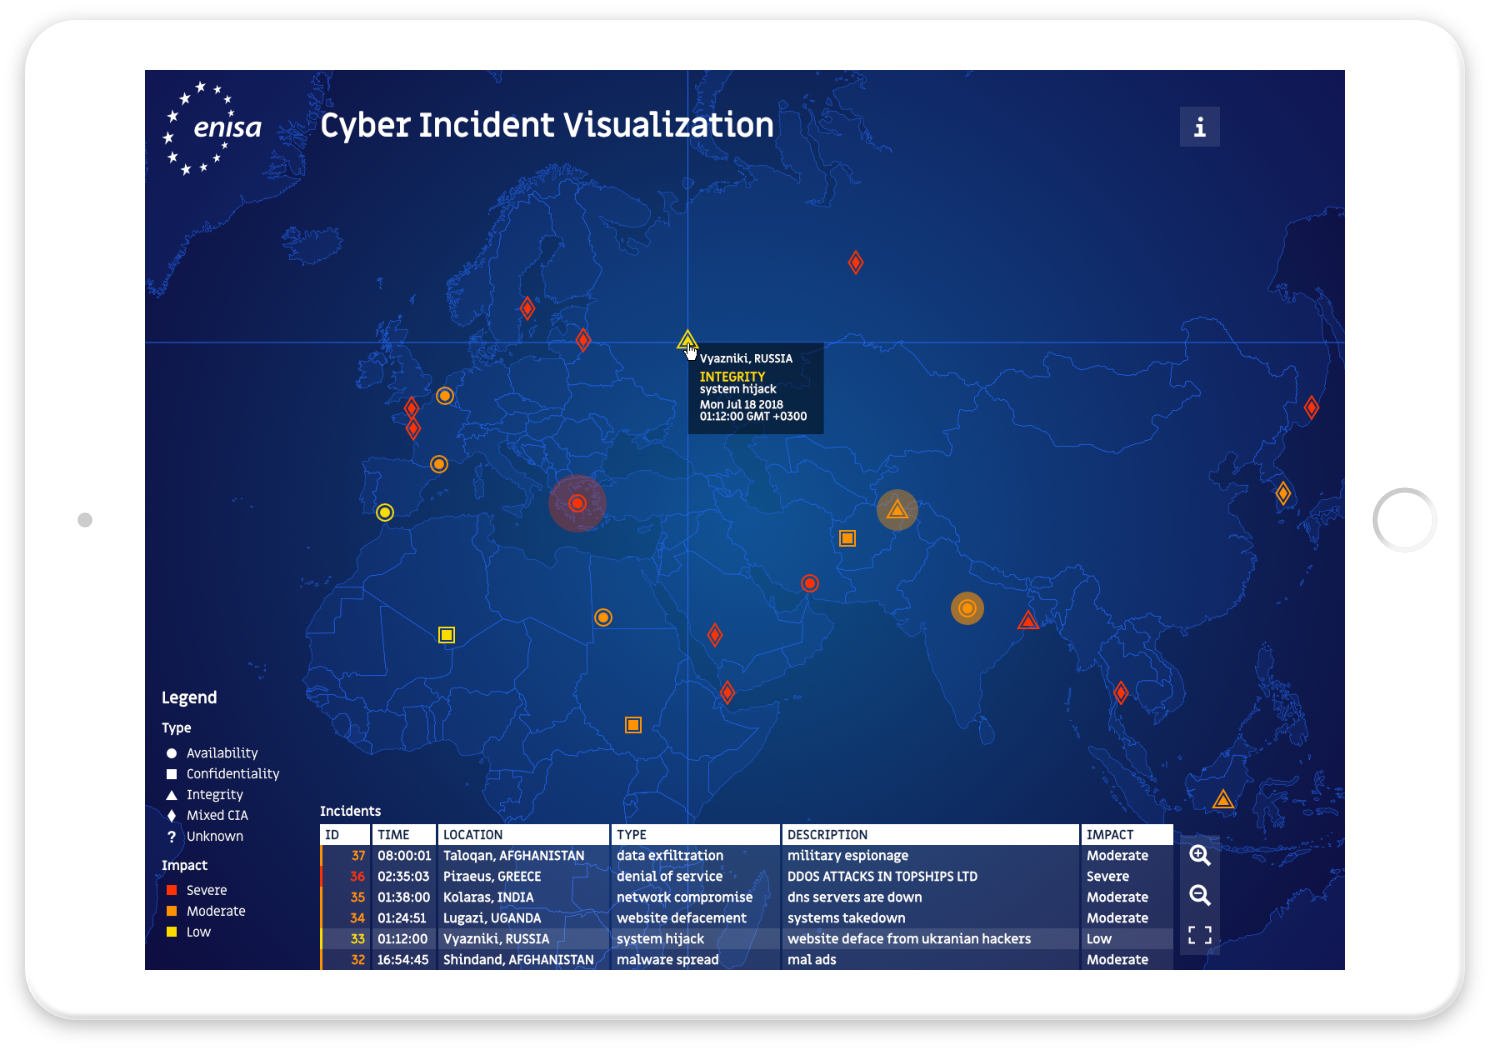 Cyber incident visualization